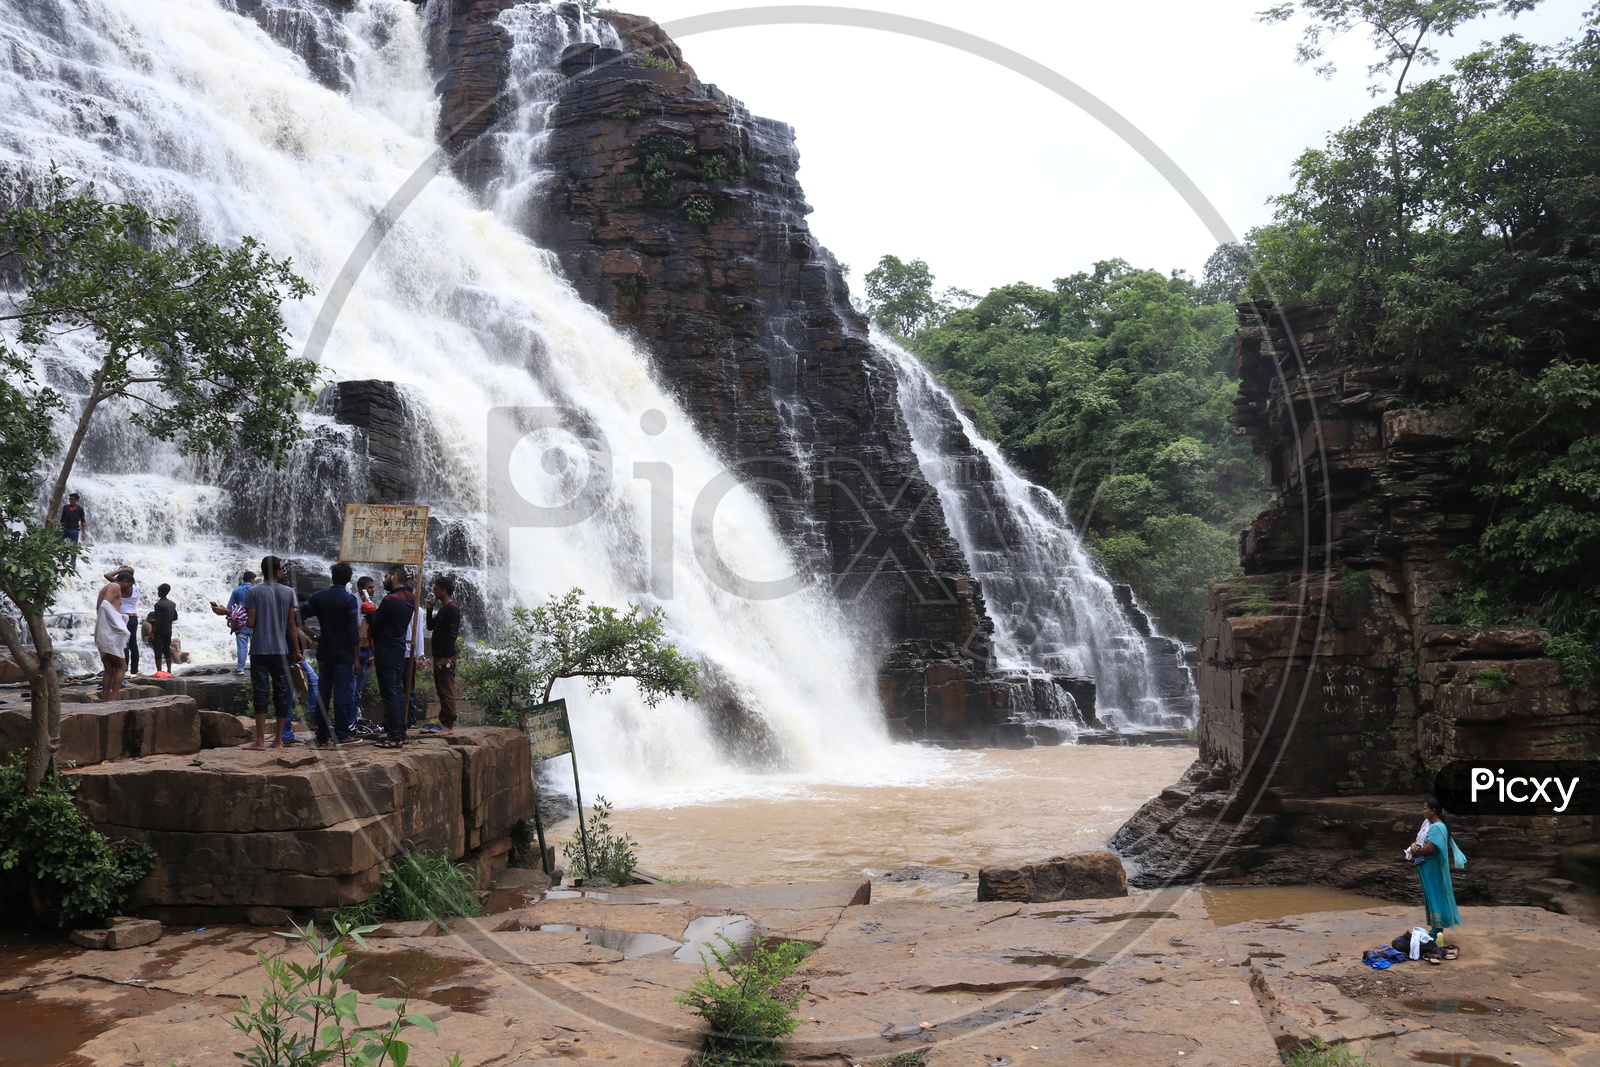 Tourists enjoying water fall